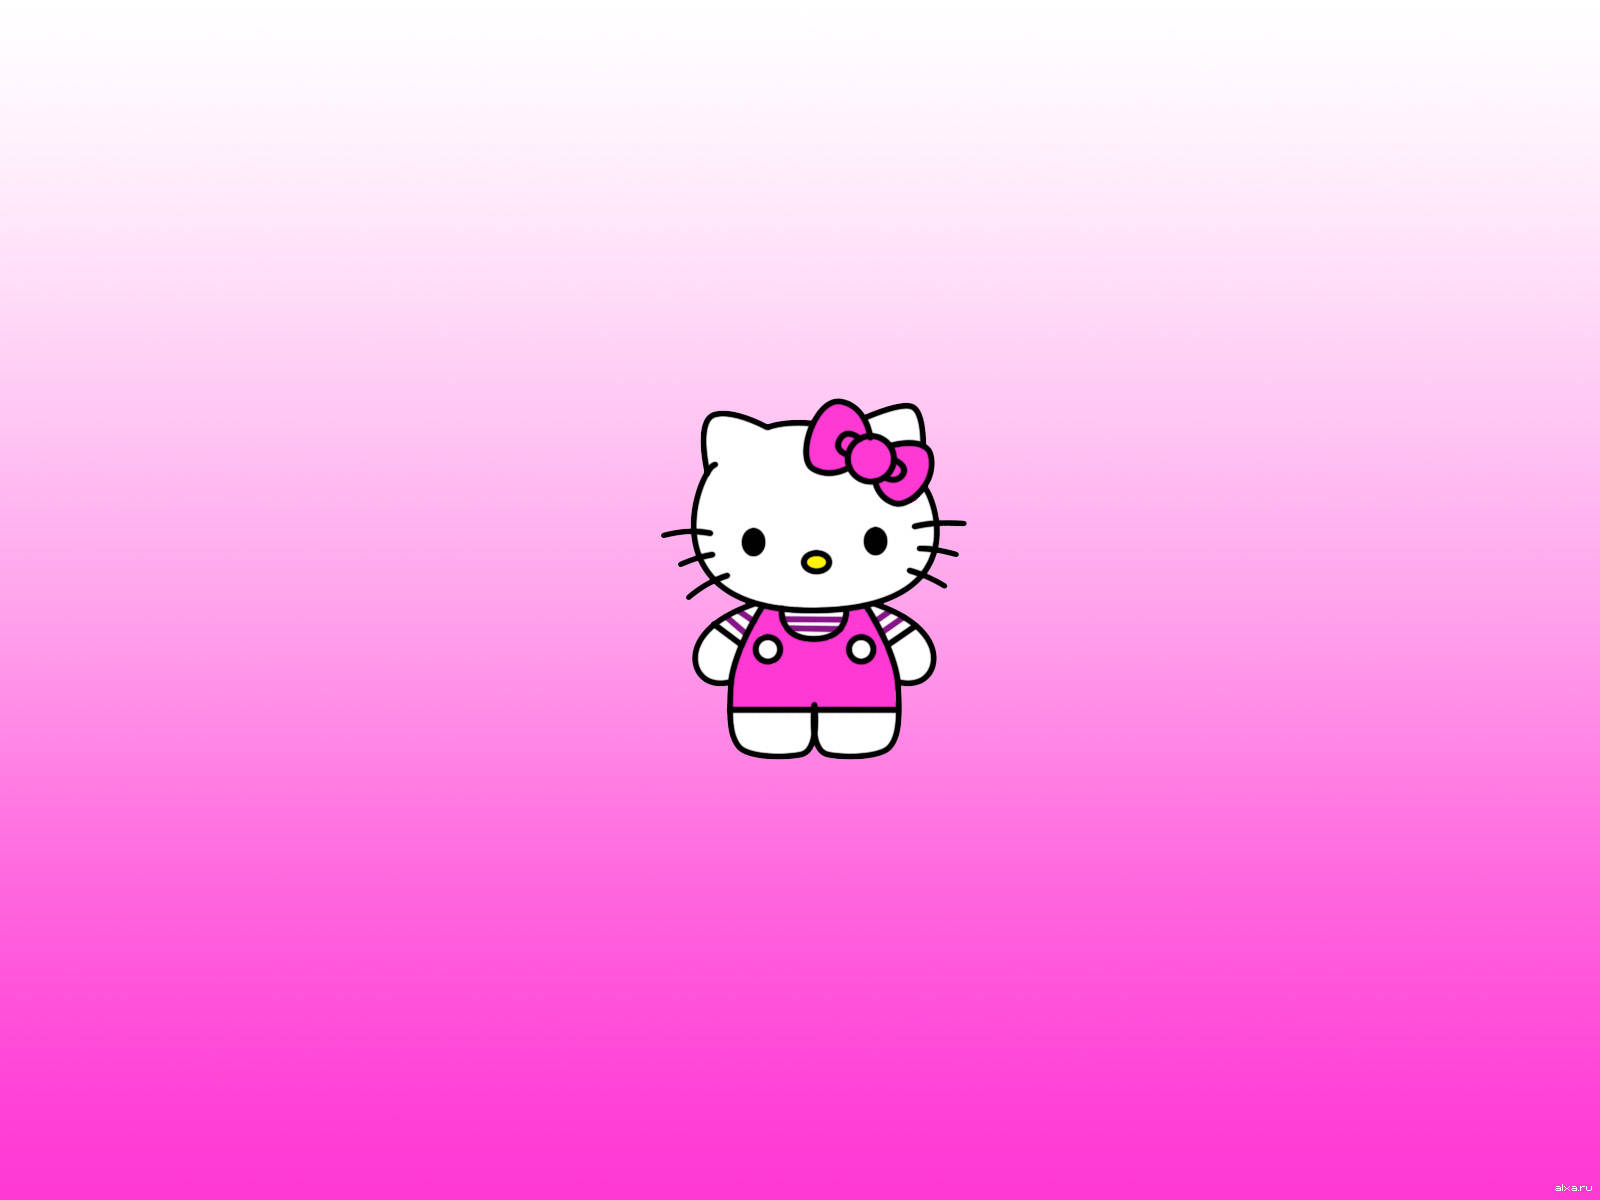 Sanriodesktop Hello Kitty Gradiente Rosa Sfondo